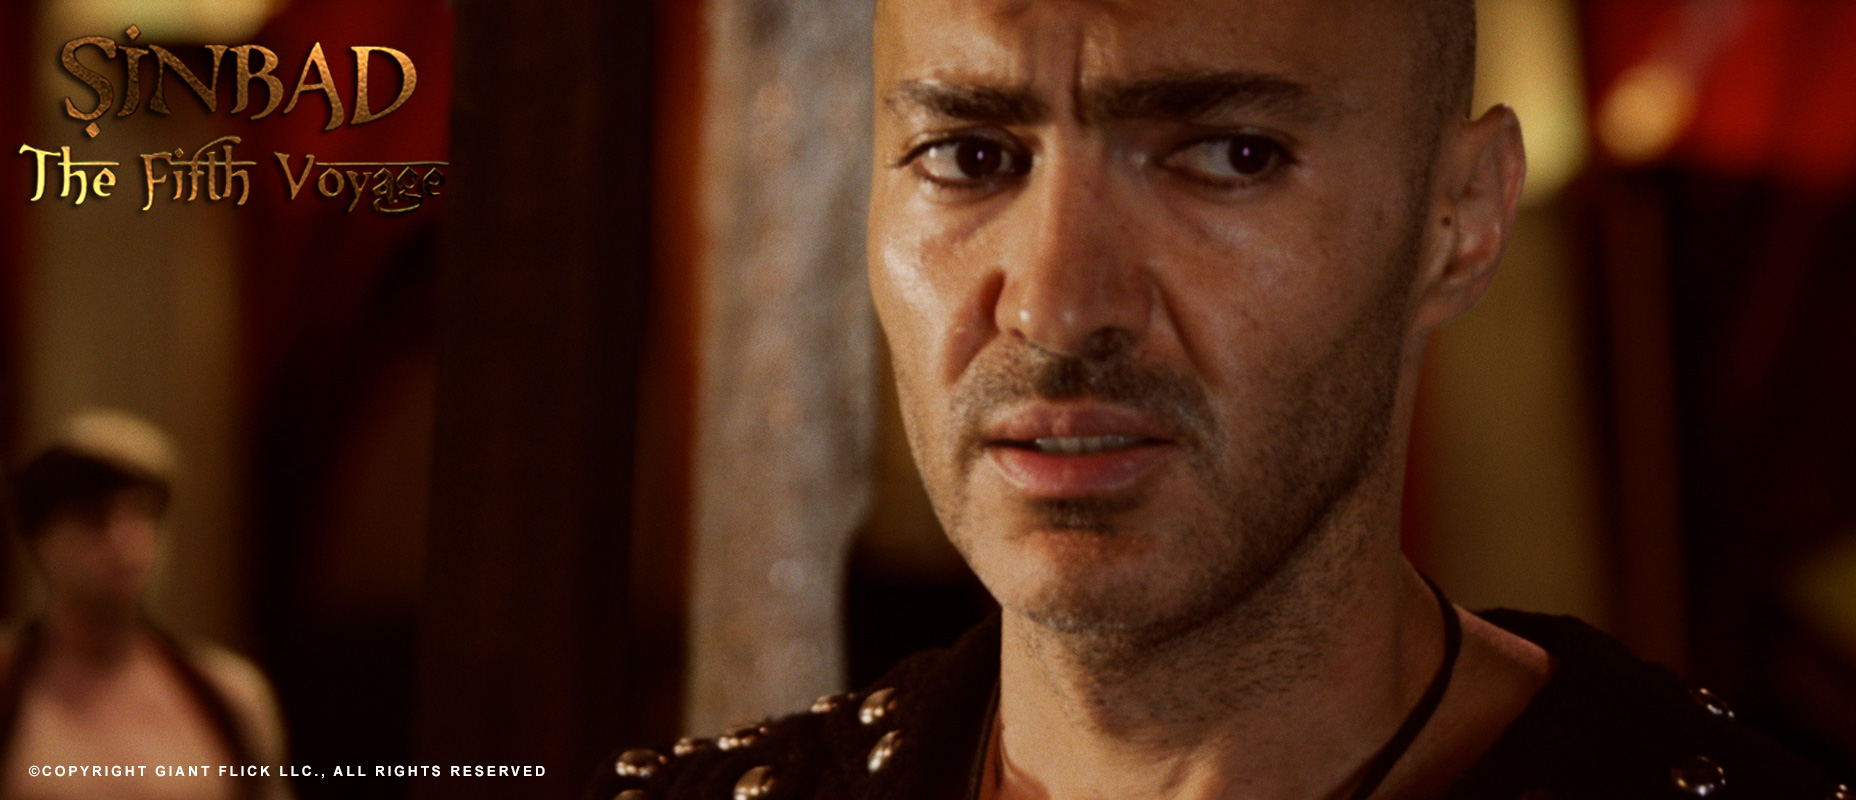 Sinbad Played by Actor/Director Shahin Sean Solimon (Sinbad The Fifth Voyage)